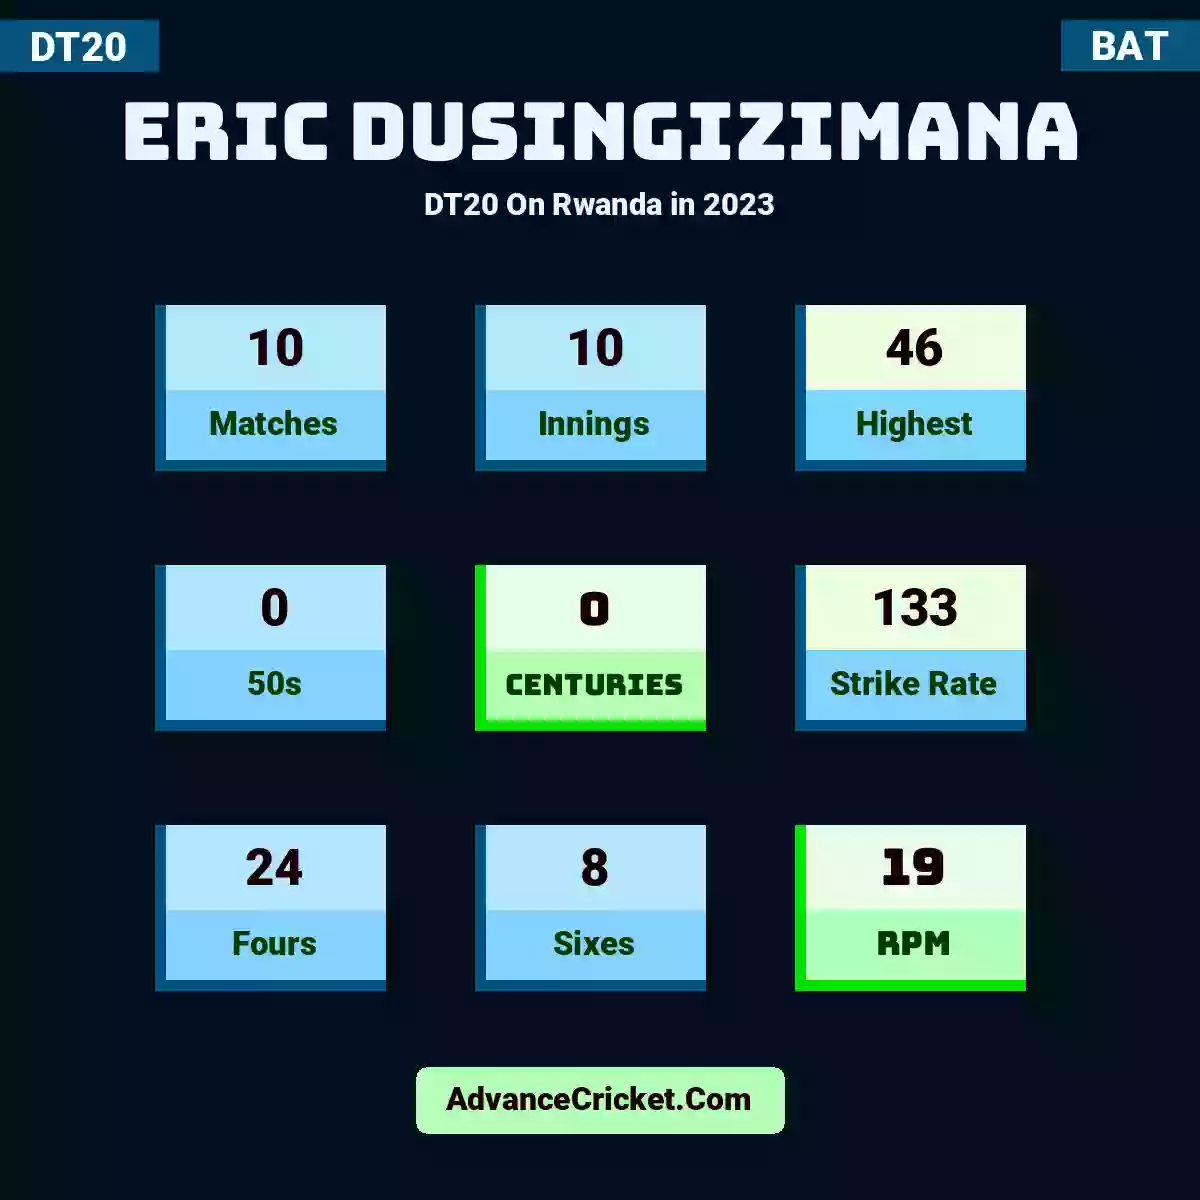 Eric Dusingizimana DT20  On Rwanda in 2023, Eric Dusingizimana played 10 matches, scored 46 runs as highest, 0 half-centuries, and 0 centuries, with a strike rate of 133. E.Dusingizimana hit 24 fours and 8 sixes, with an RPM of 19.